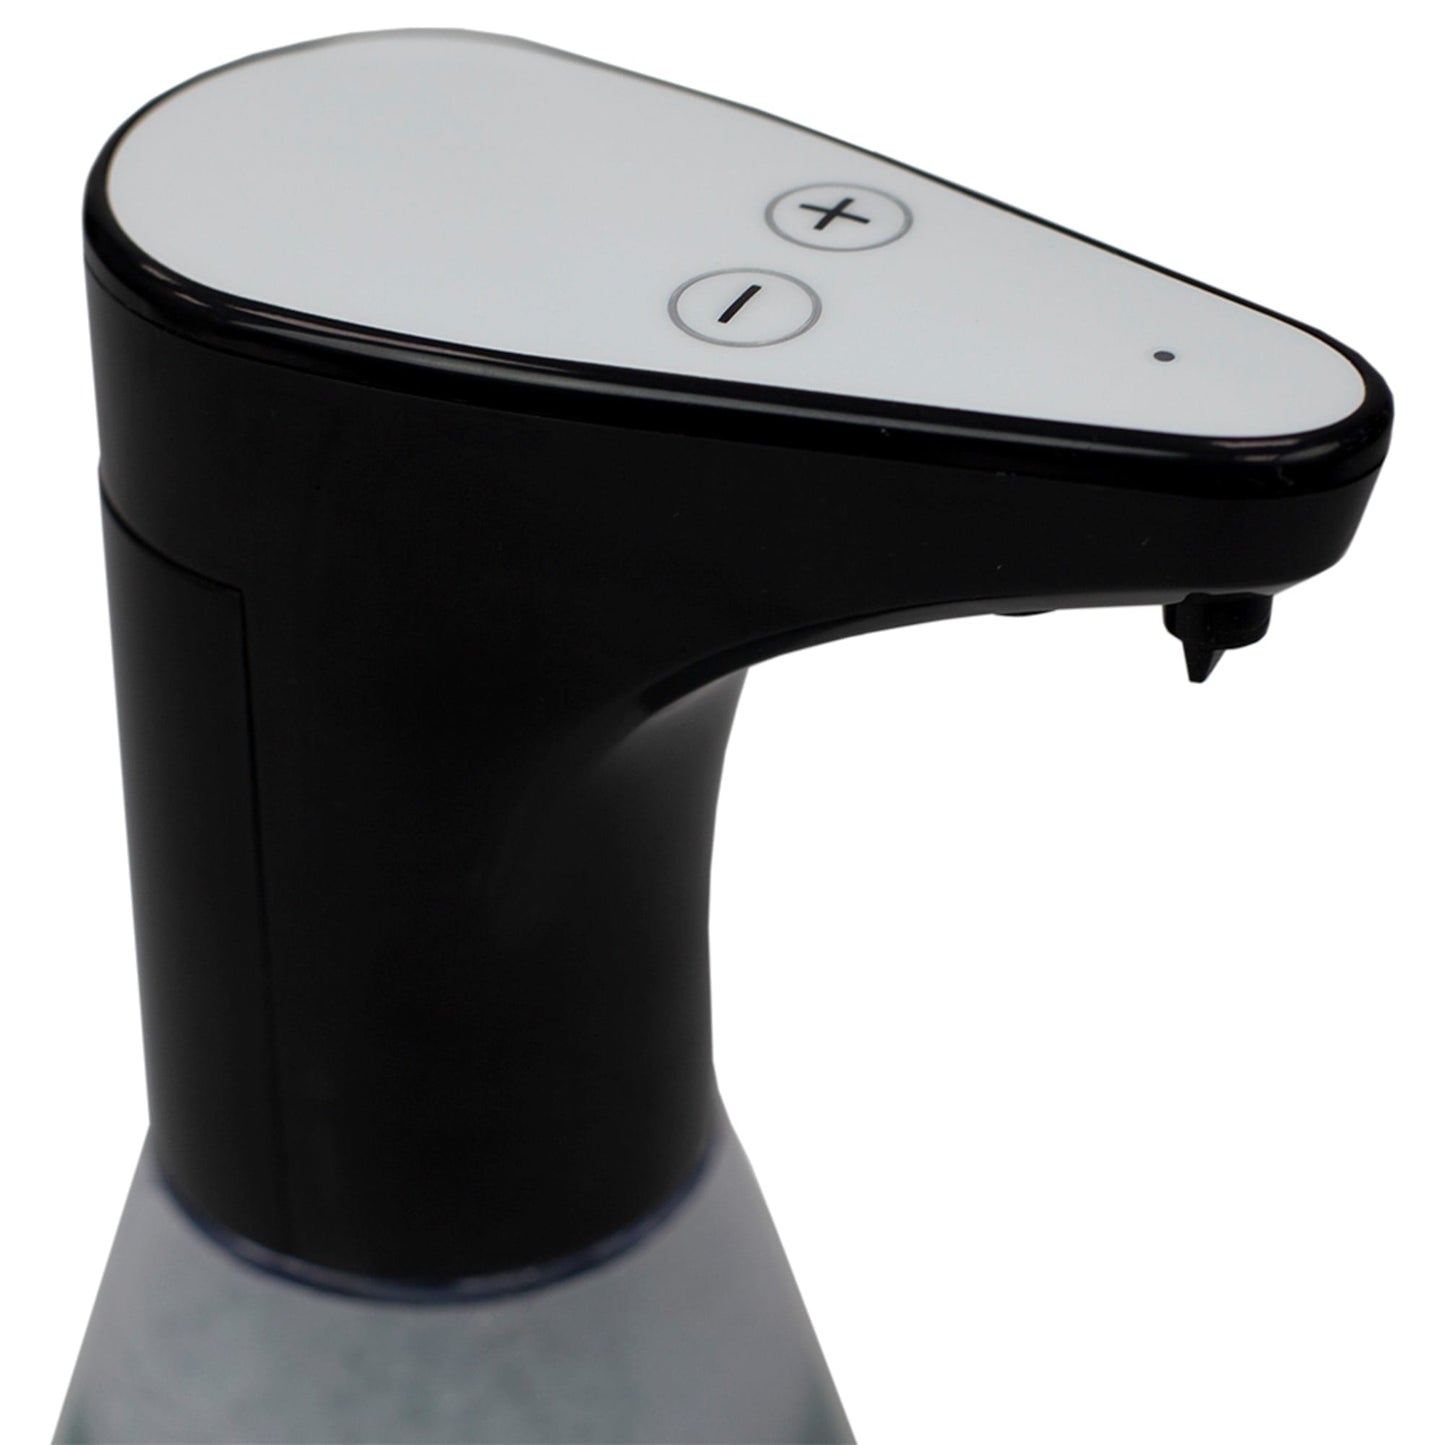 450 ml. Automatic Compact Countertop Soap Dispenser, Black